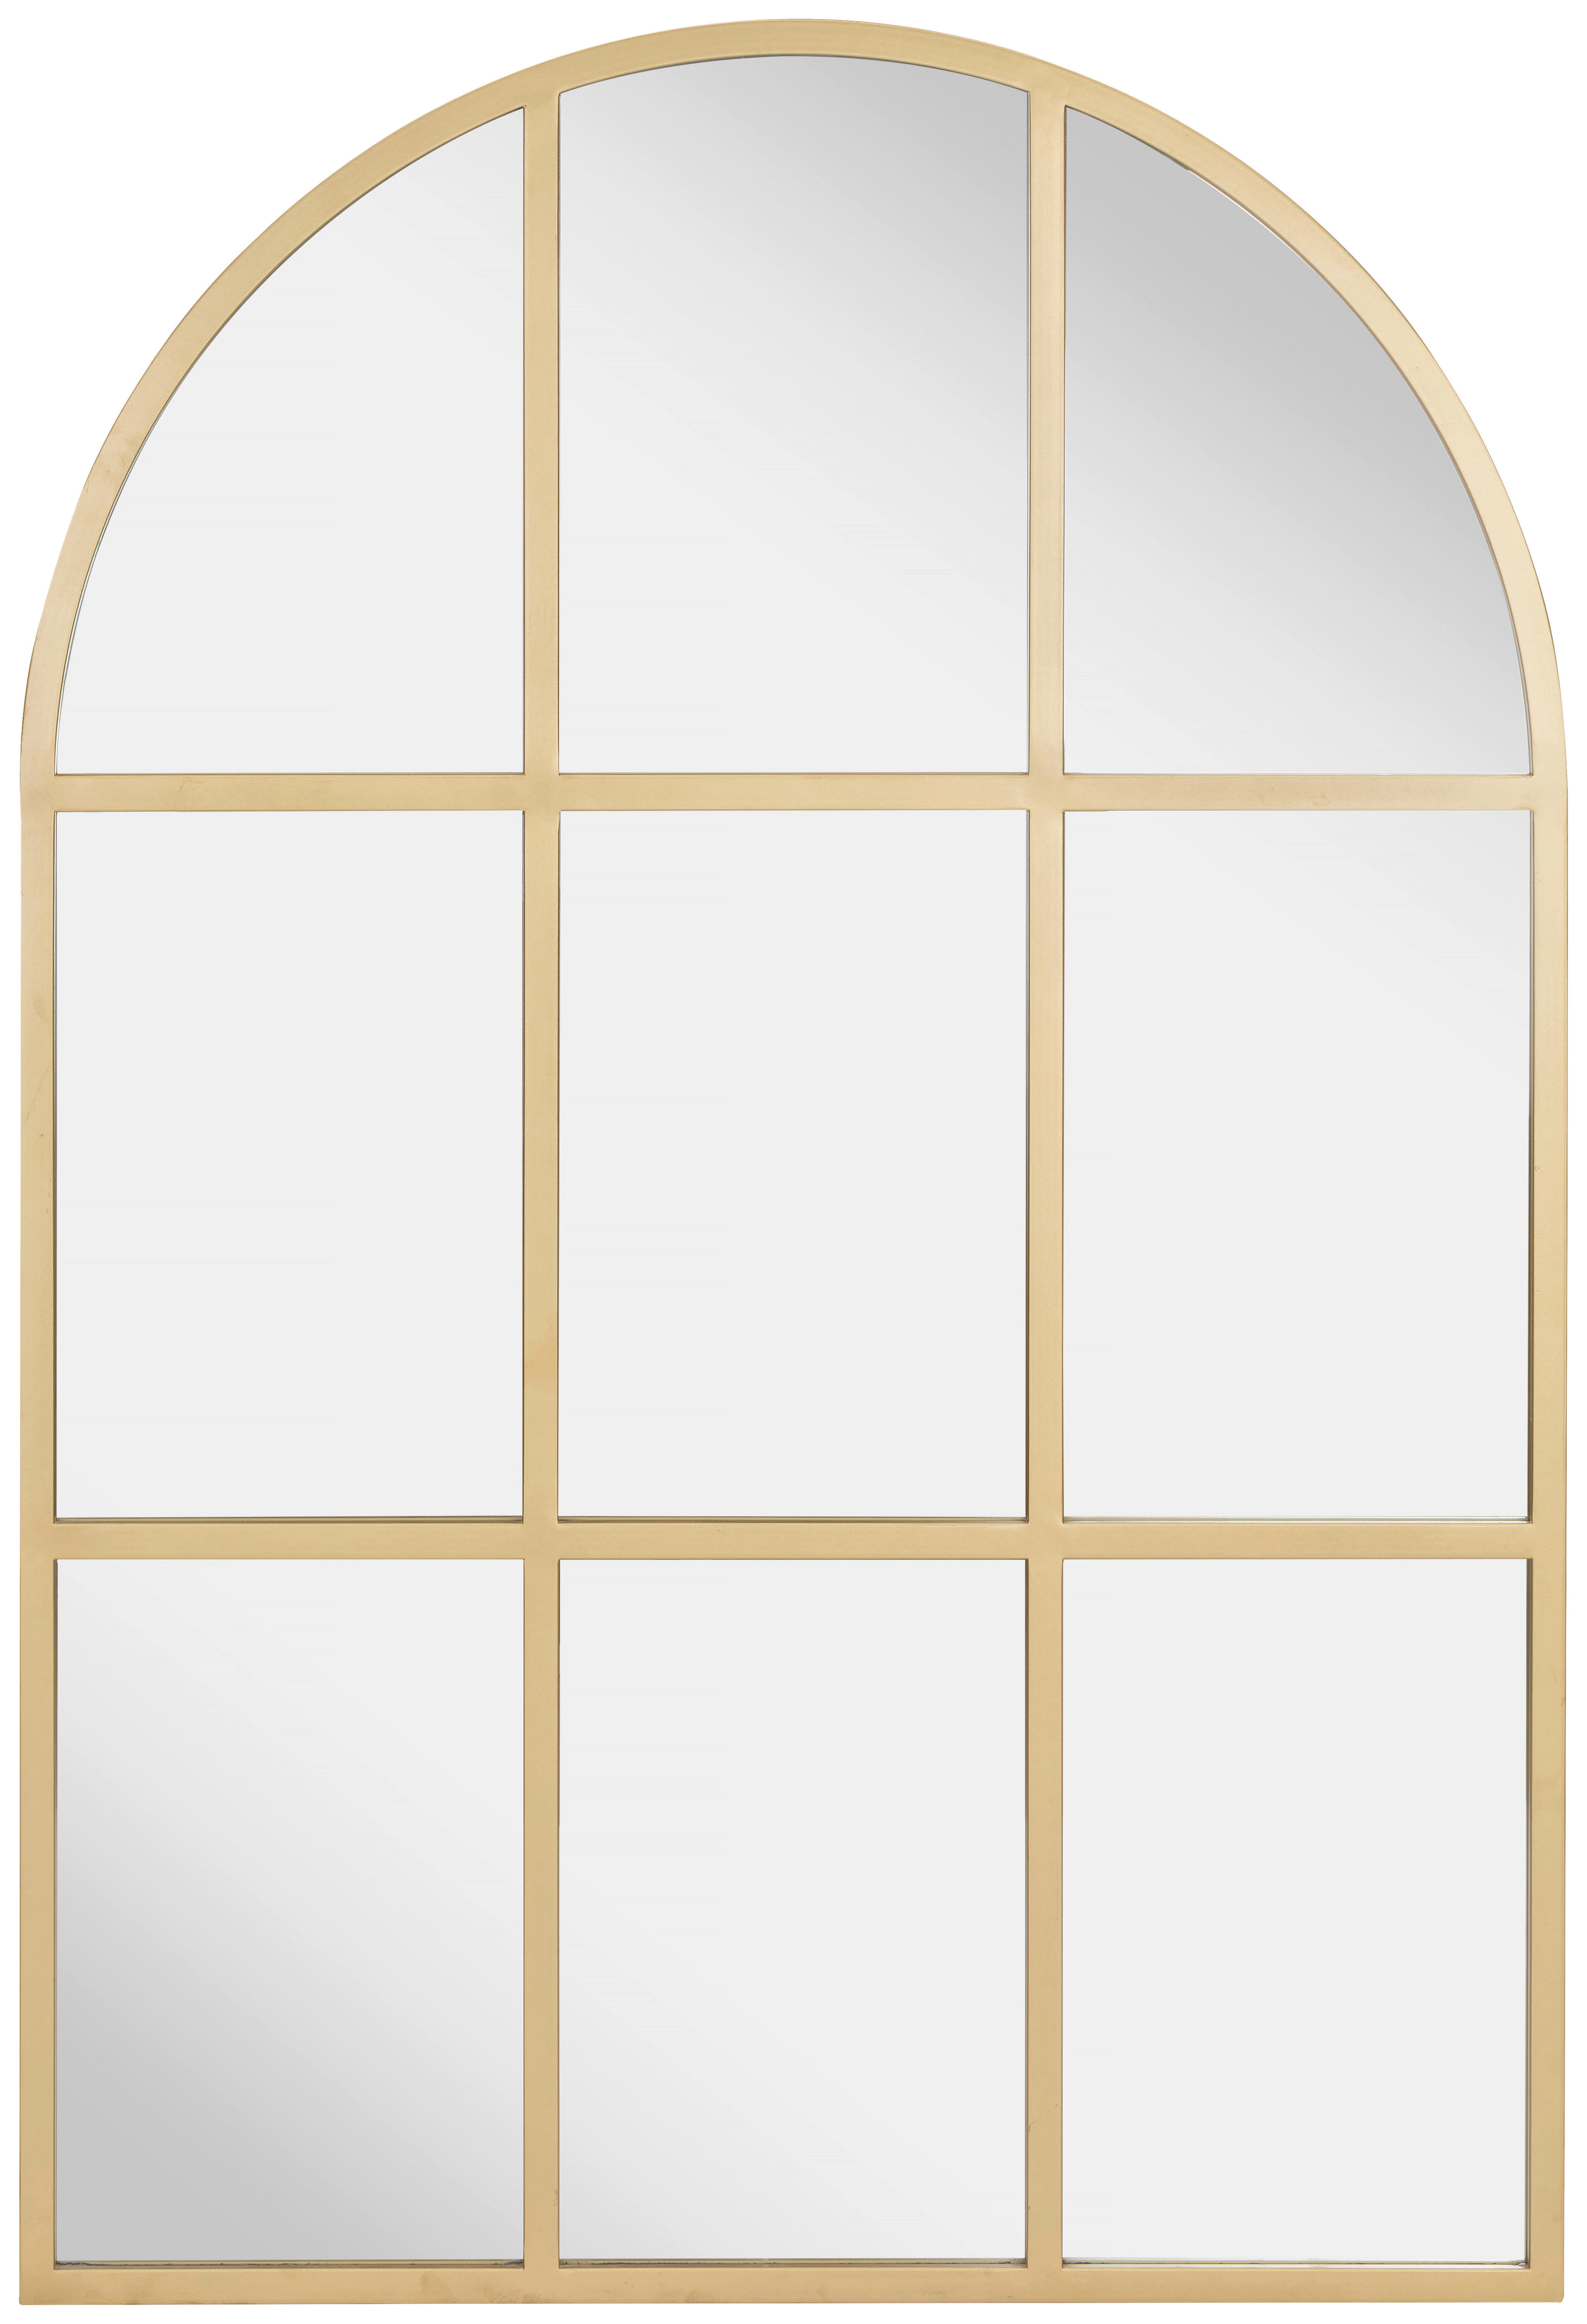 WANDSPIEGEL 85/125/3 cm    - Goldfarben, Design, Glas/Metall (85/125/3cm) - MID.YOU